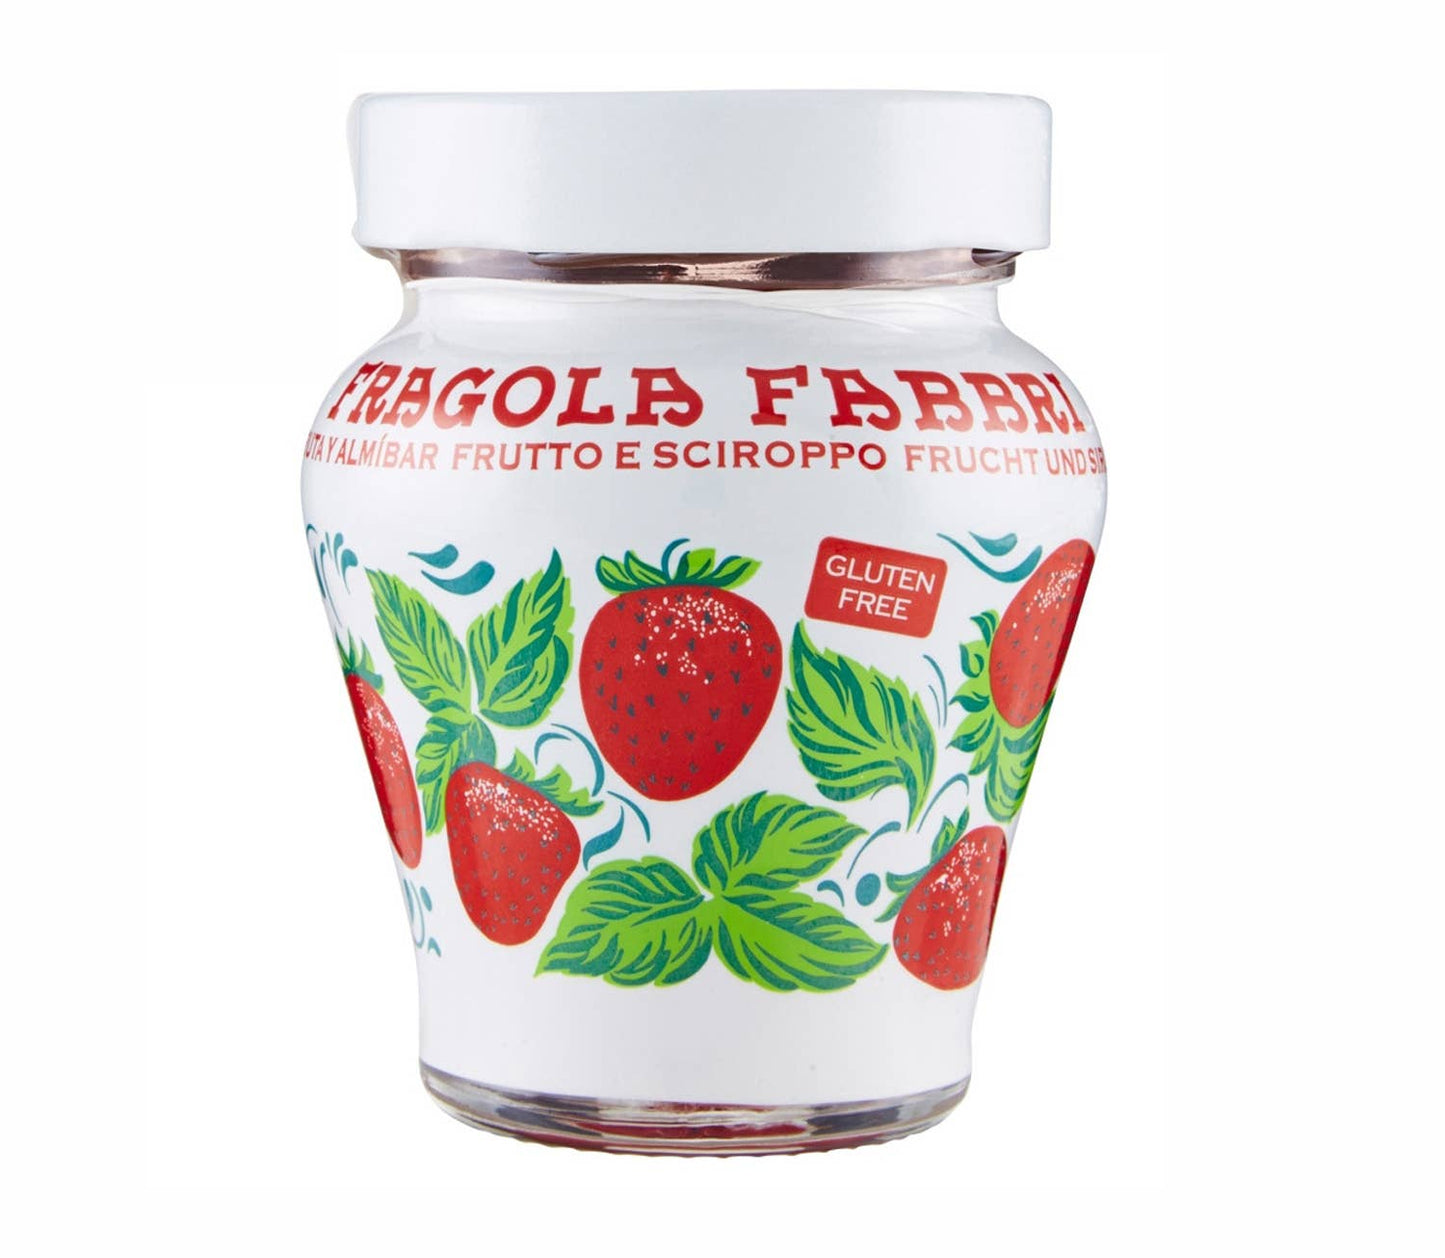 Wild Italian Strawberries in Syrup - Fabbri 230g glass jar